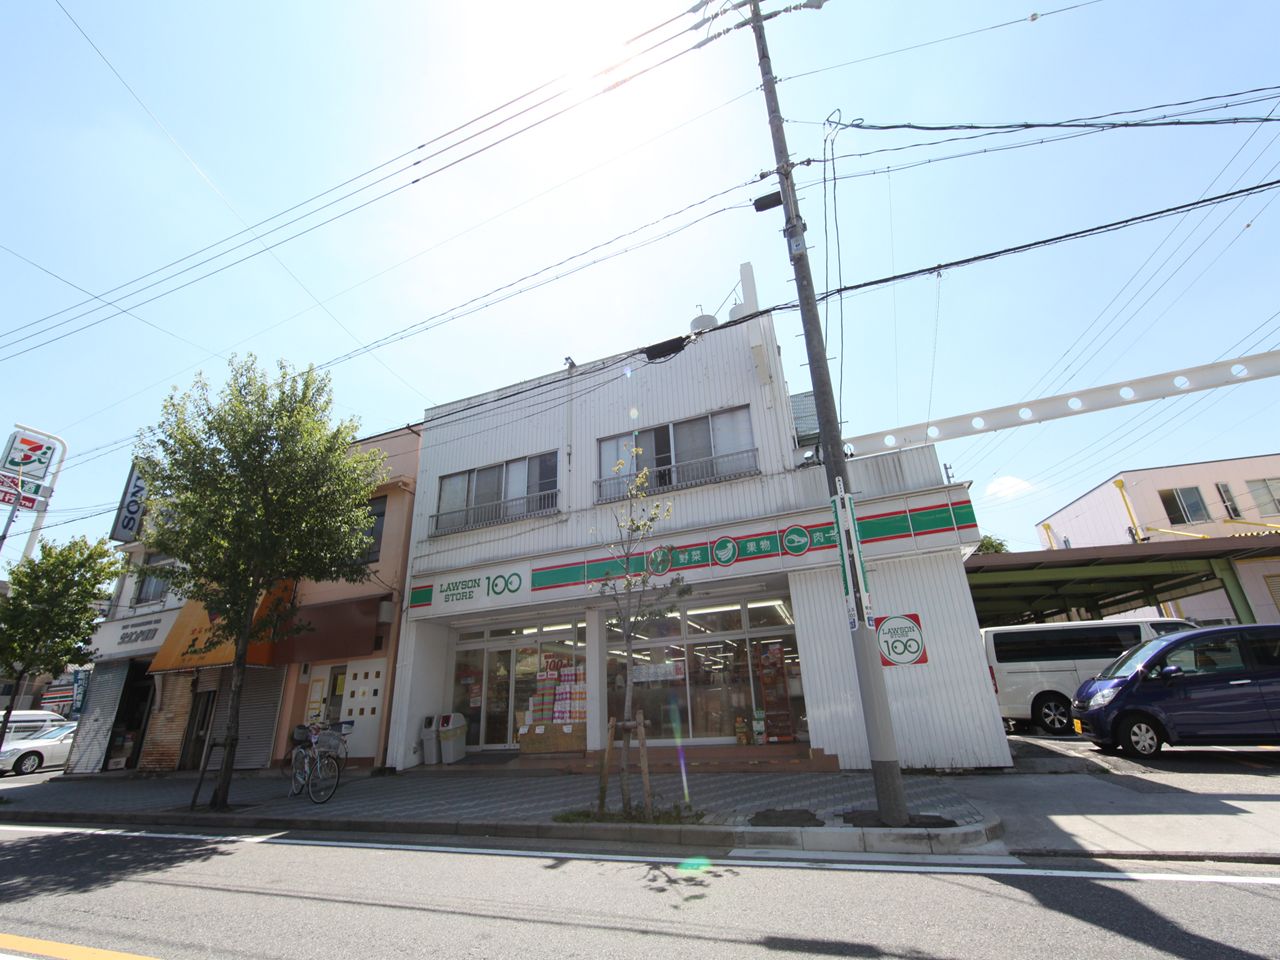 Convenience store. 341m until the Lawson Store 100 Karasumori store (convenience store)